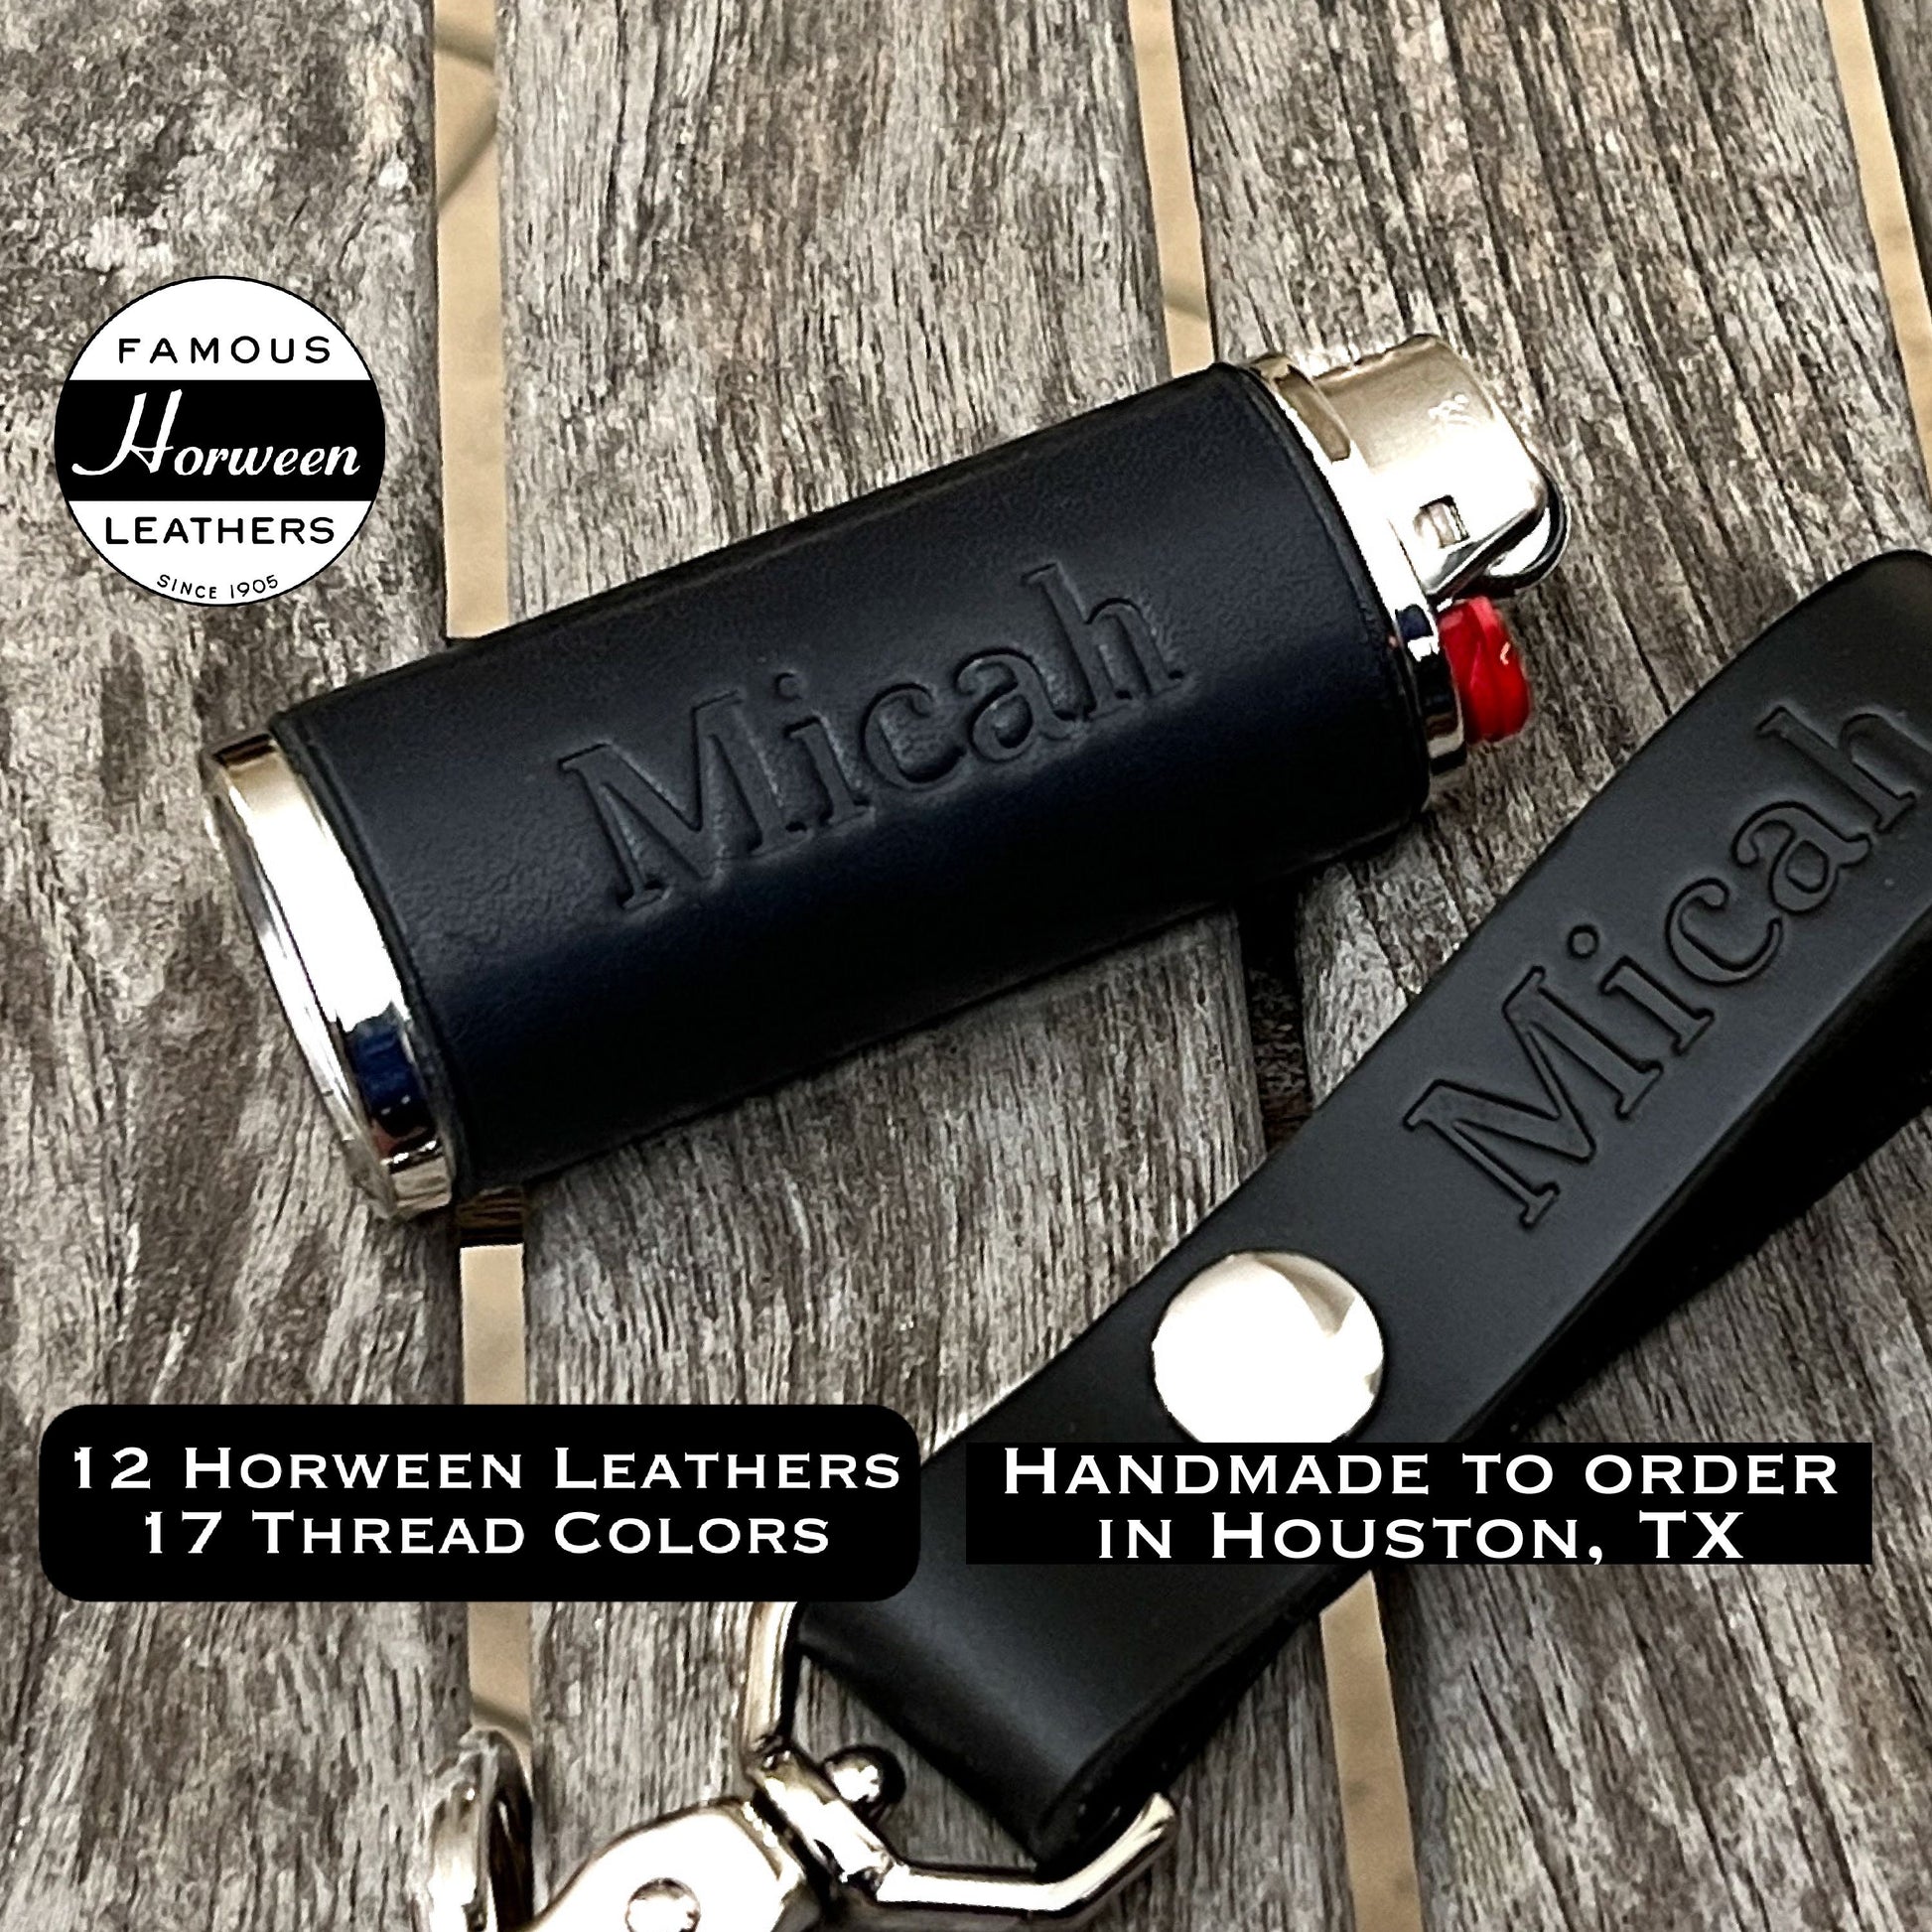 Handmade custom bic lighter case in horween leather with matching keychain, cigarette lighter in Black CXL, handmade lighter cover